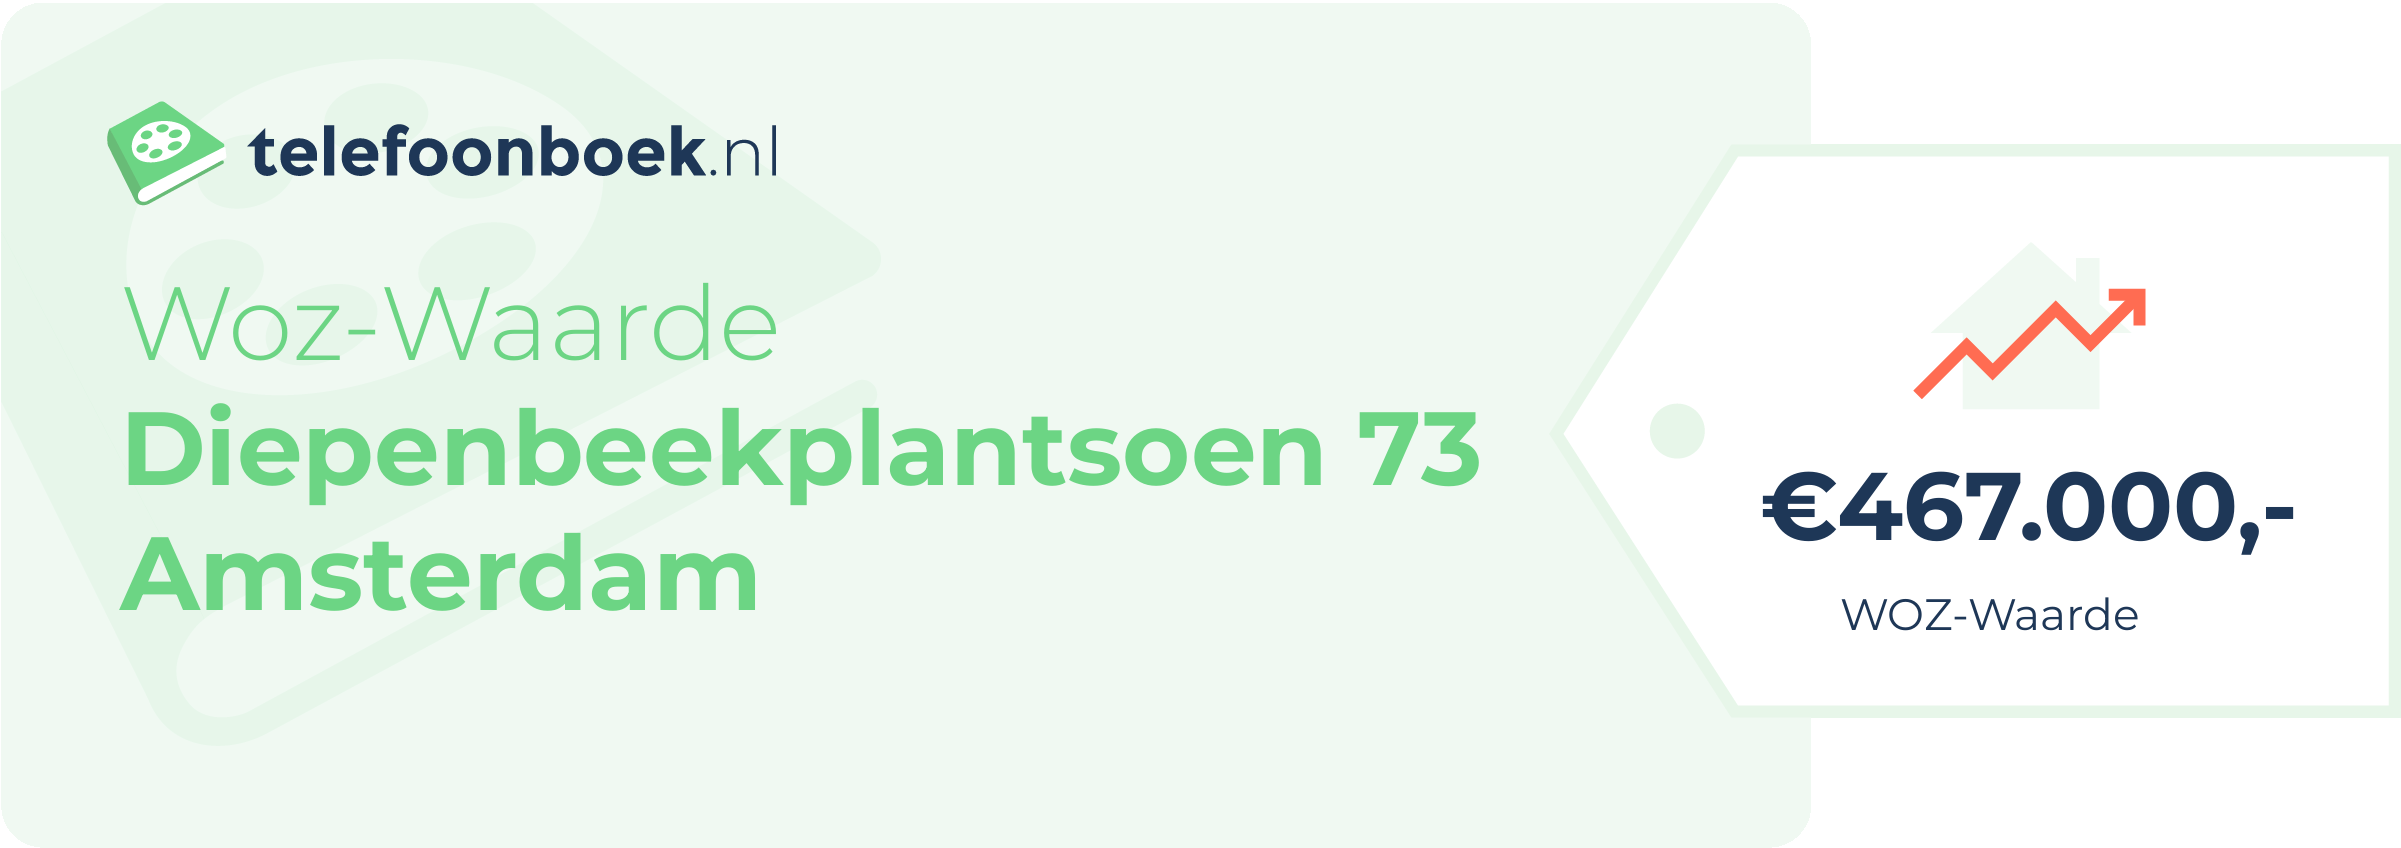 WOZ-waarde Diepenbeekplantsoen 73 Amsterdam